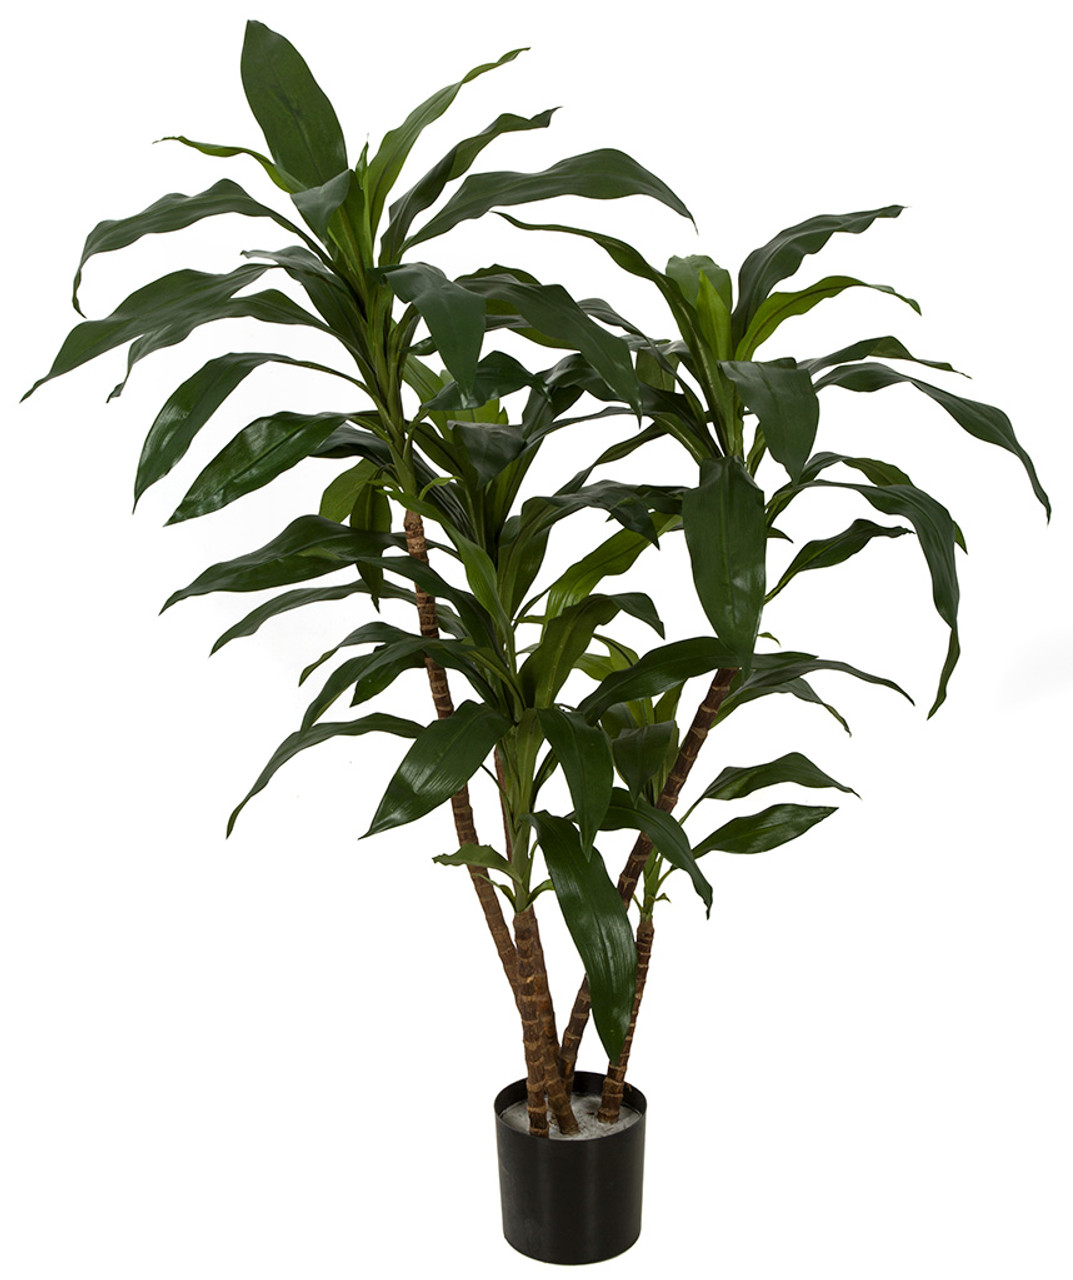 3' Dracaena Plant x 5 on Wood Trunk | Regular or FireSafe Foliage ...